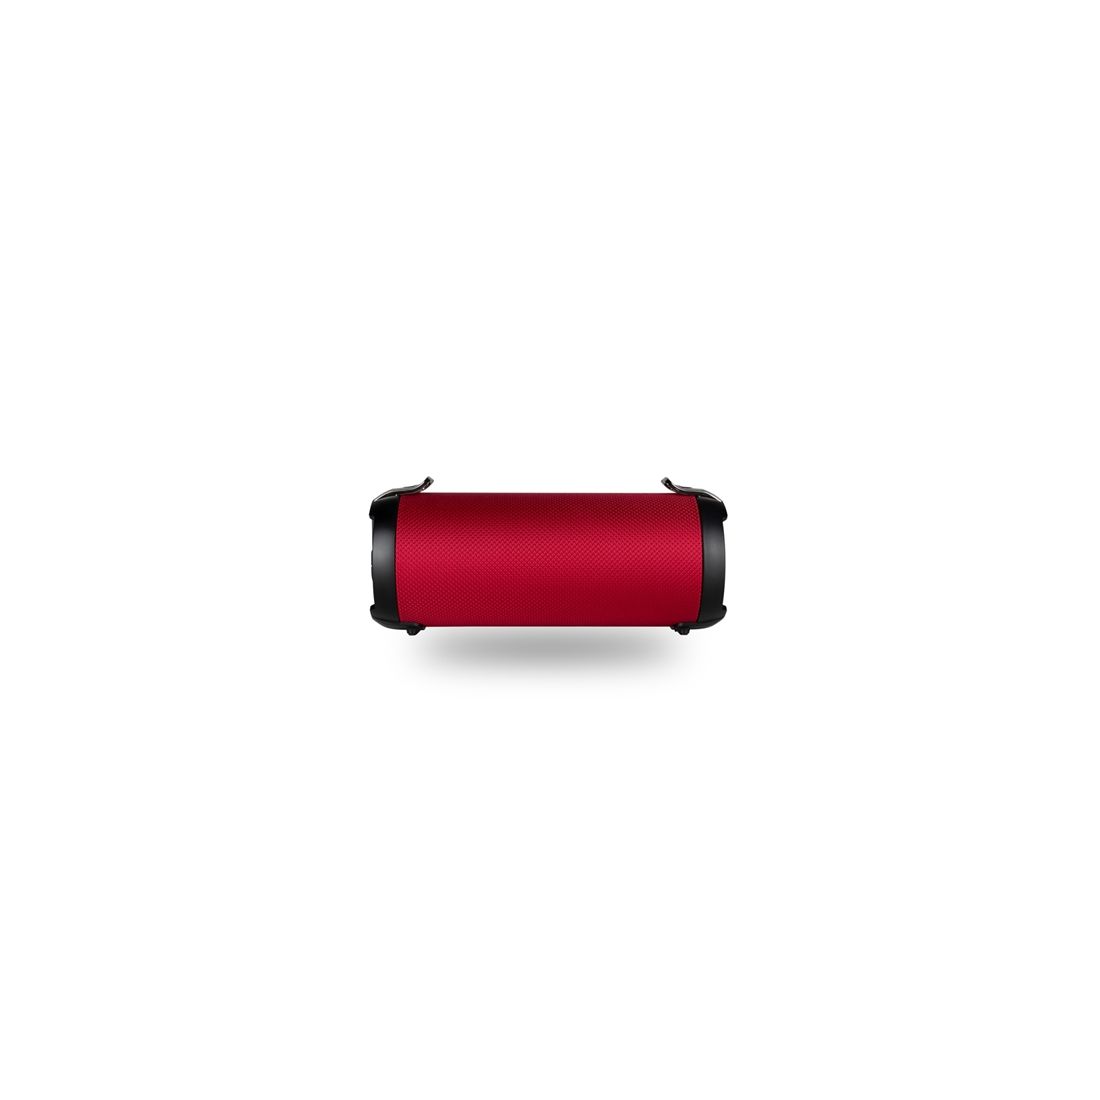 NGS Altavoz Portatil Roller Tempo Rojo USB SD AUX